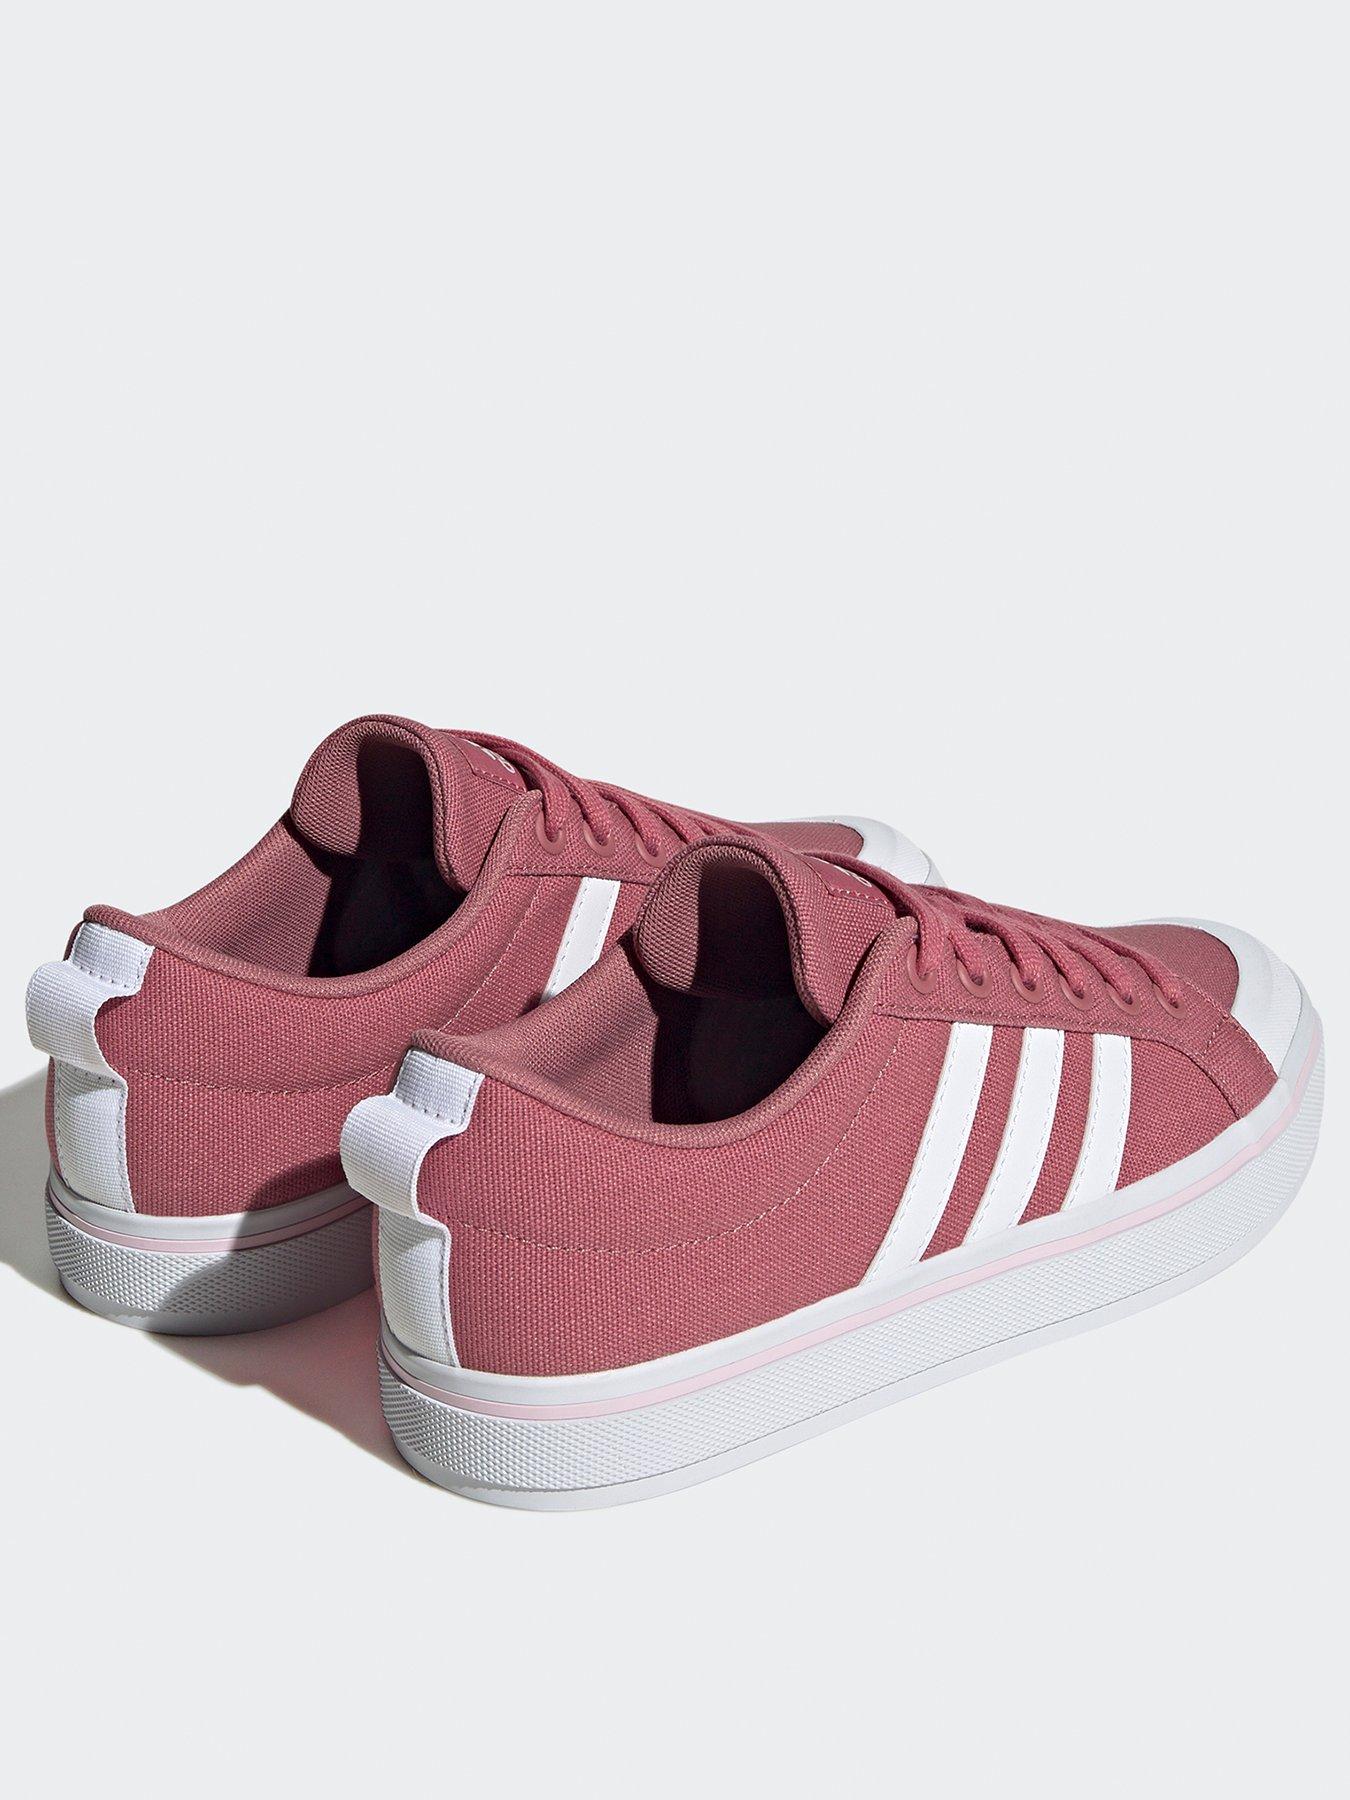 Adidas Bravada - Pink, Women's Fashion, Footwear, Sneakers on